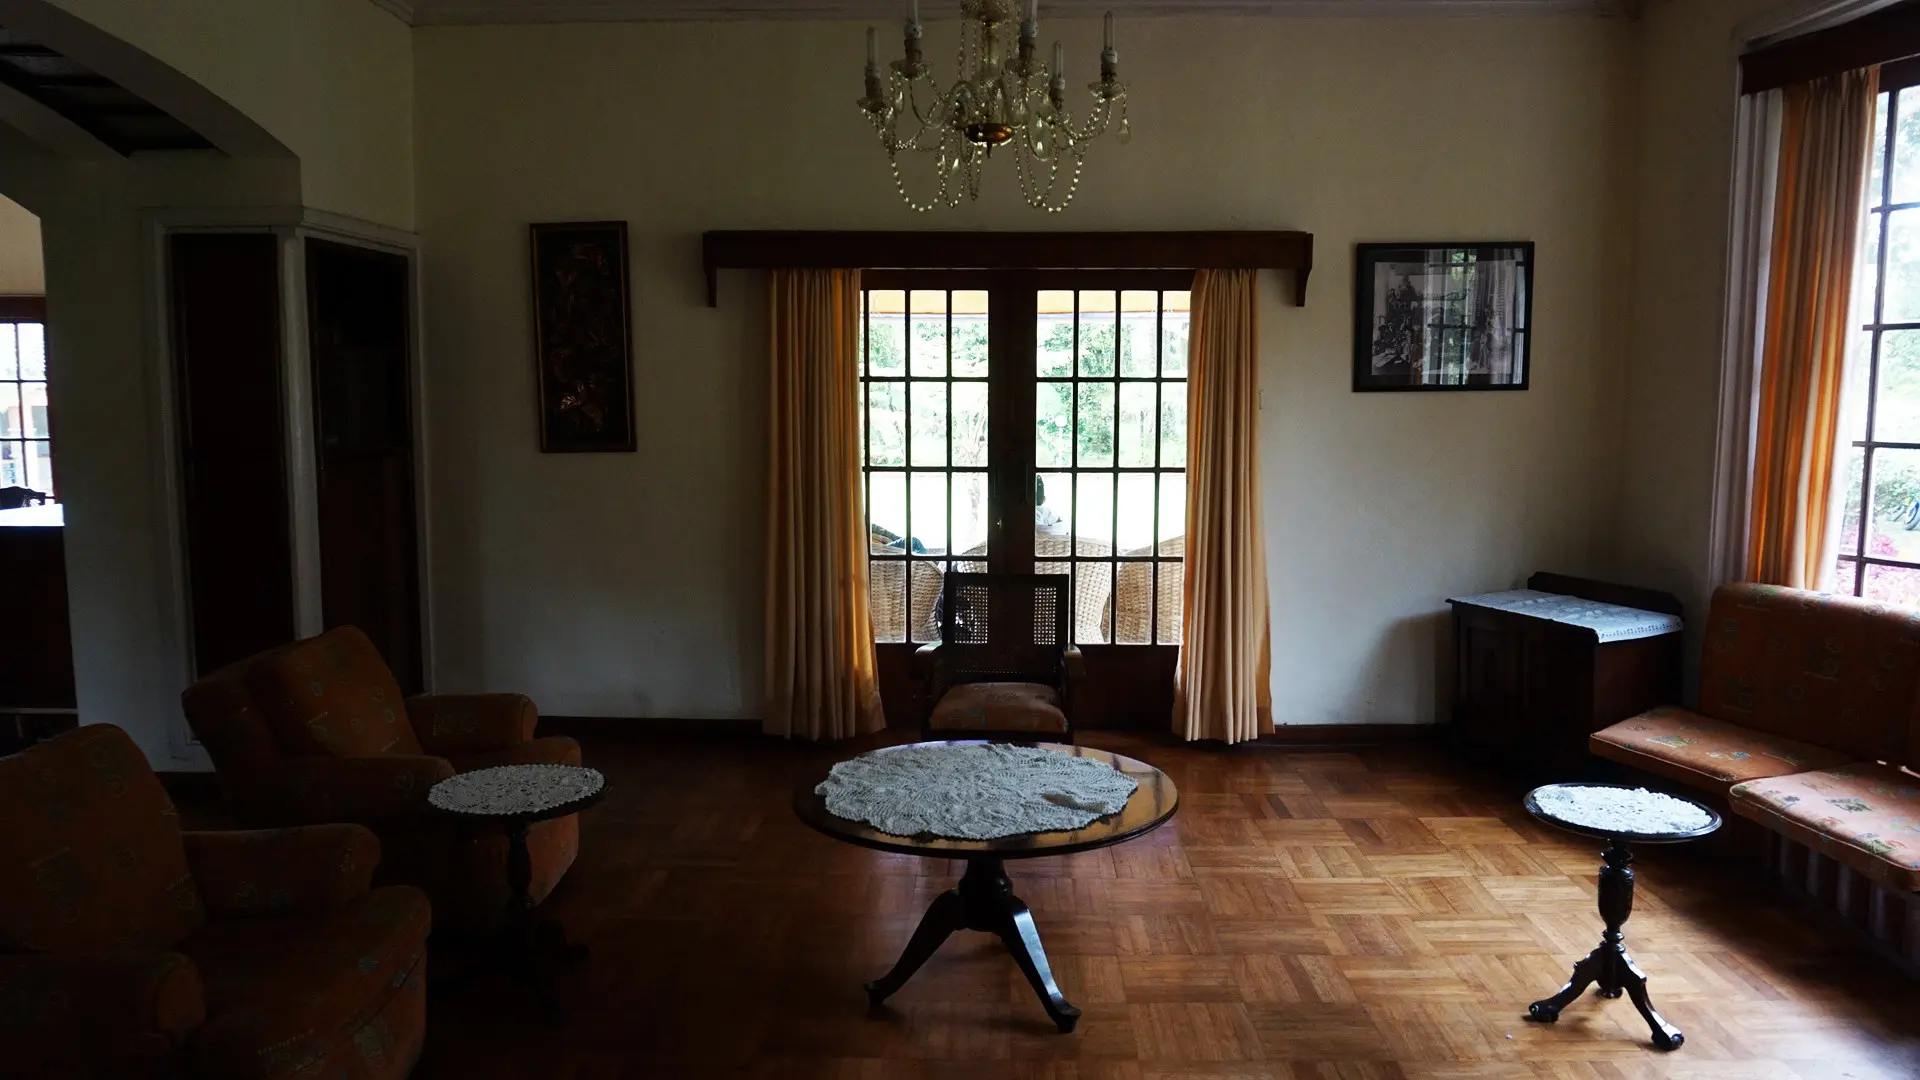 Sejumlah properti dari abad ke-18 dan 19 masih terawat dengan baik di rumah peninggalan Raja Teh Priangan, Karel Albert Rudolf Bosscha, di Pangalengan, Kabupaten Bandung, Jawa Barat. (Liputan6.com/Huyogo Simbolon)